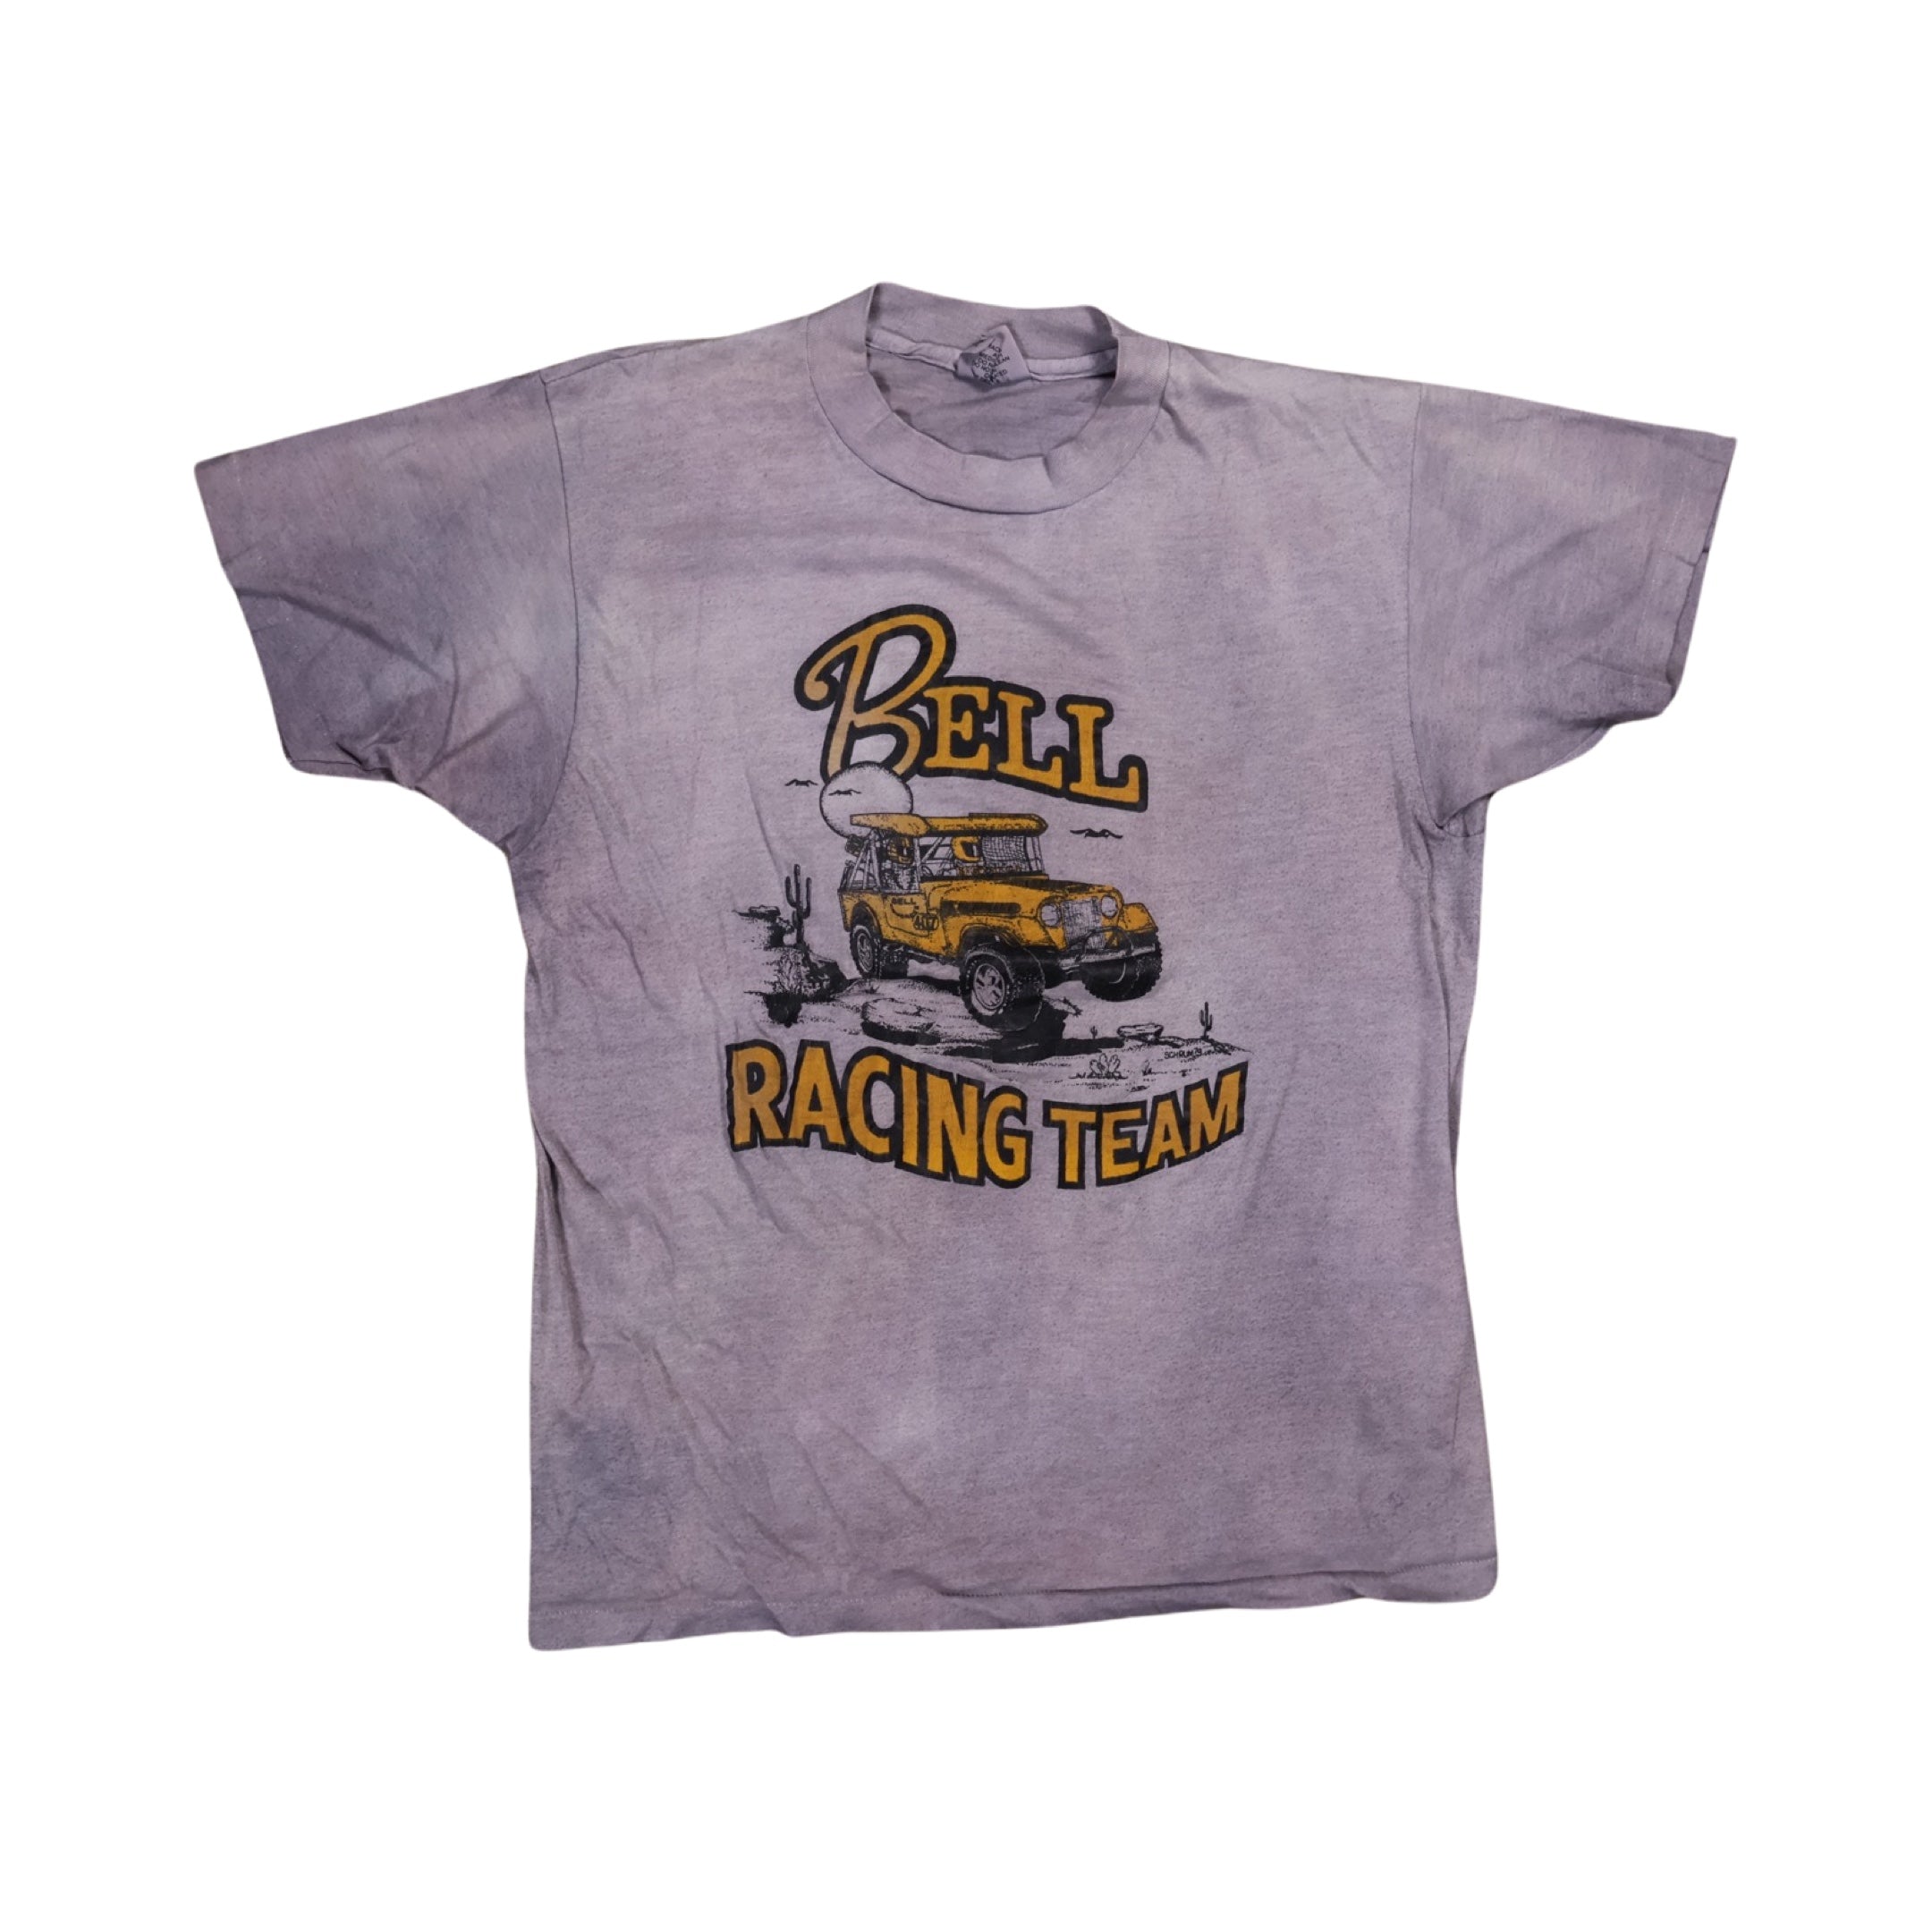 Bell Racing Team 1979 T-Shirt Essential (Medium)